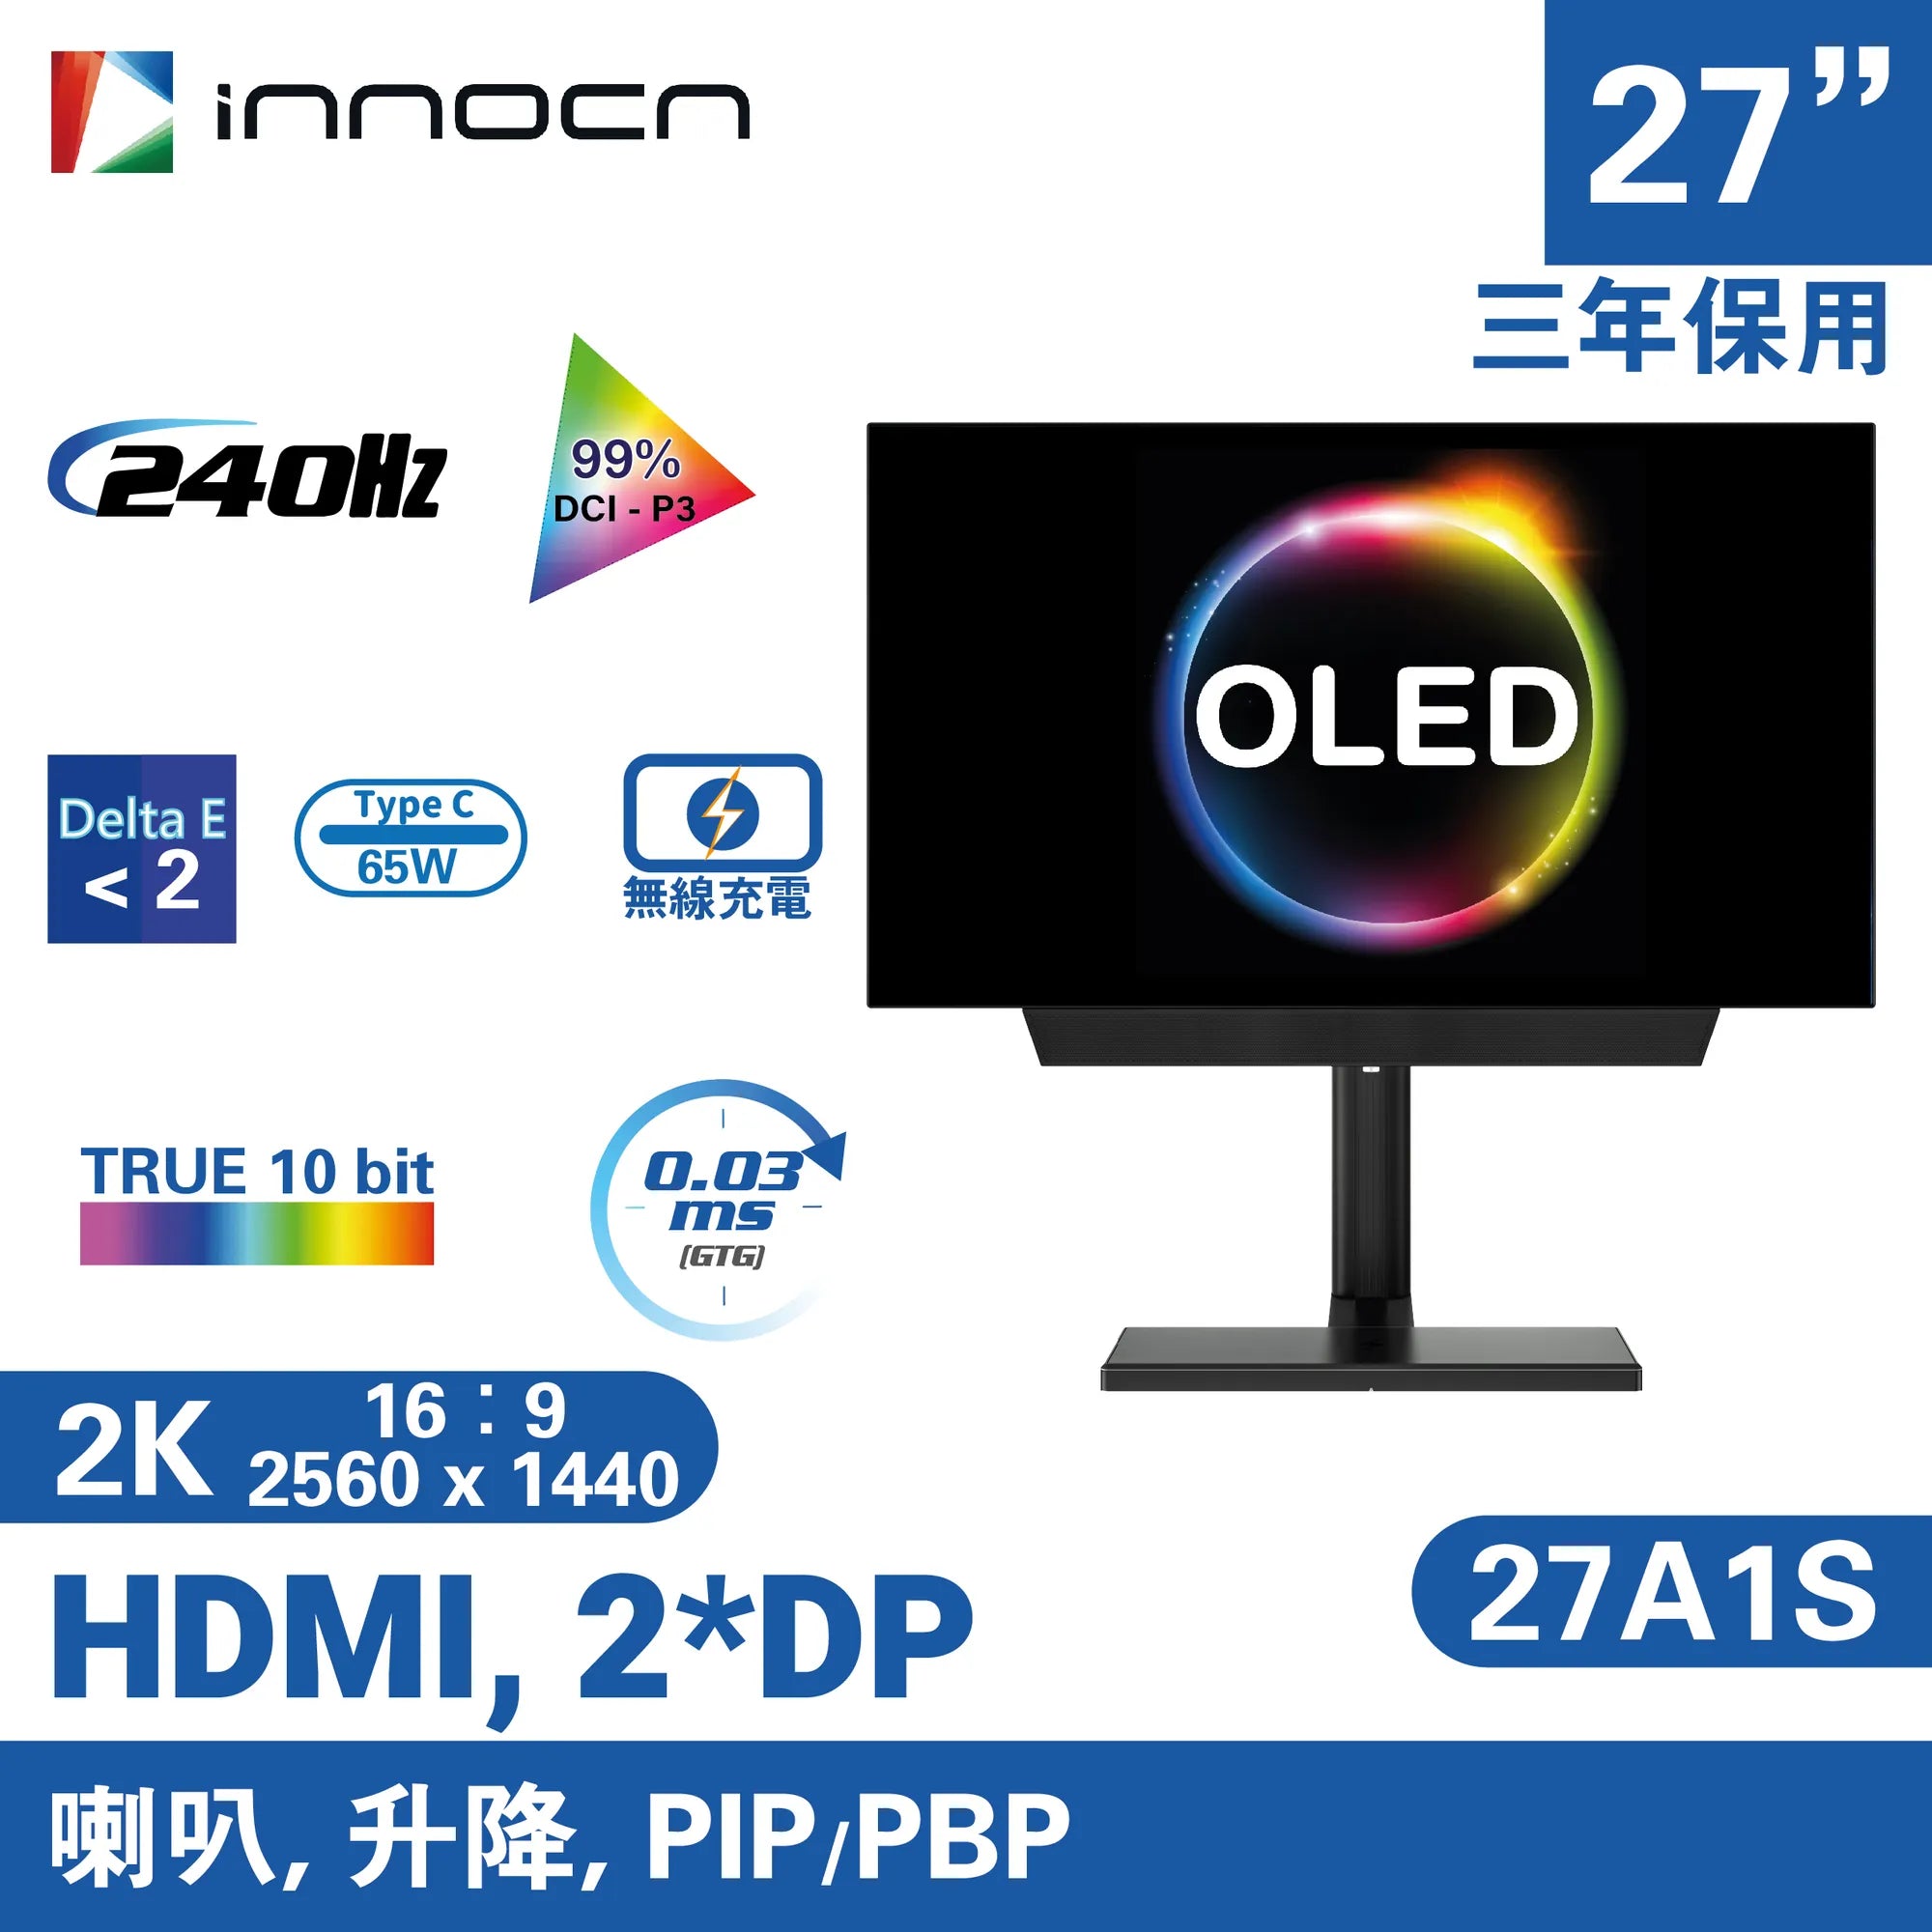 INNOCN 27A1S W-OLED 電競顯示器 (27 吋 / WQHD / 240Hz / 0.03ms / W-OLED / Type-C 65W、15W 無線充電 / 99% DCI-P3 / HDMI 2.1 / True 10 bits、HDR / 內置喇叭) - 2560 x 1440 3年上門保養